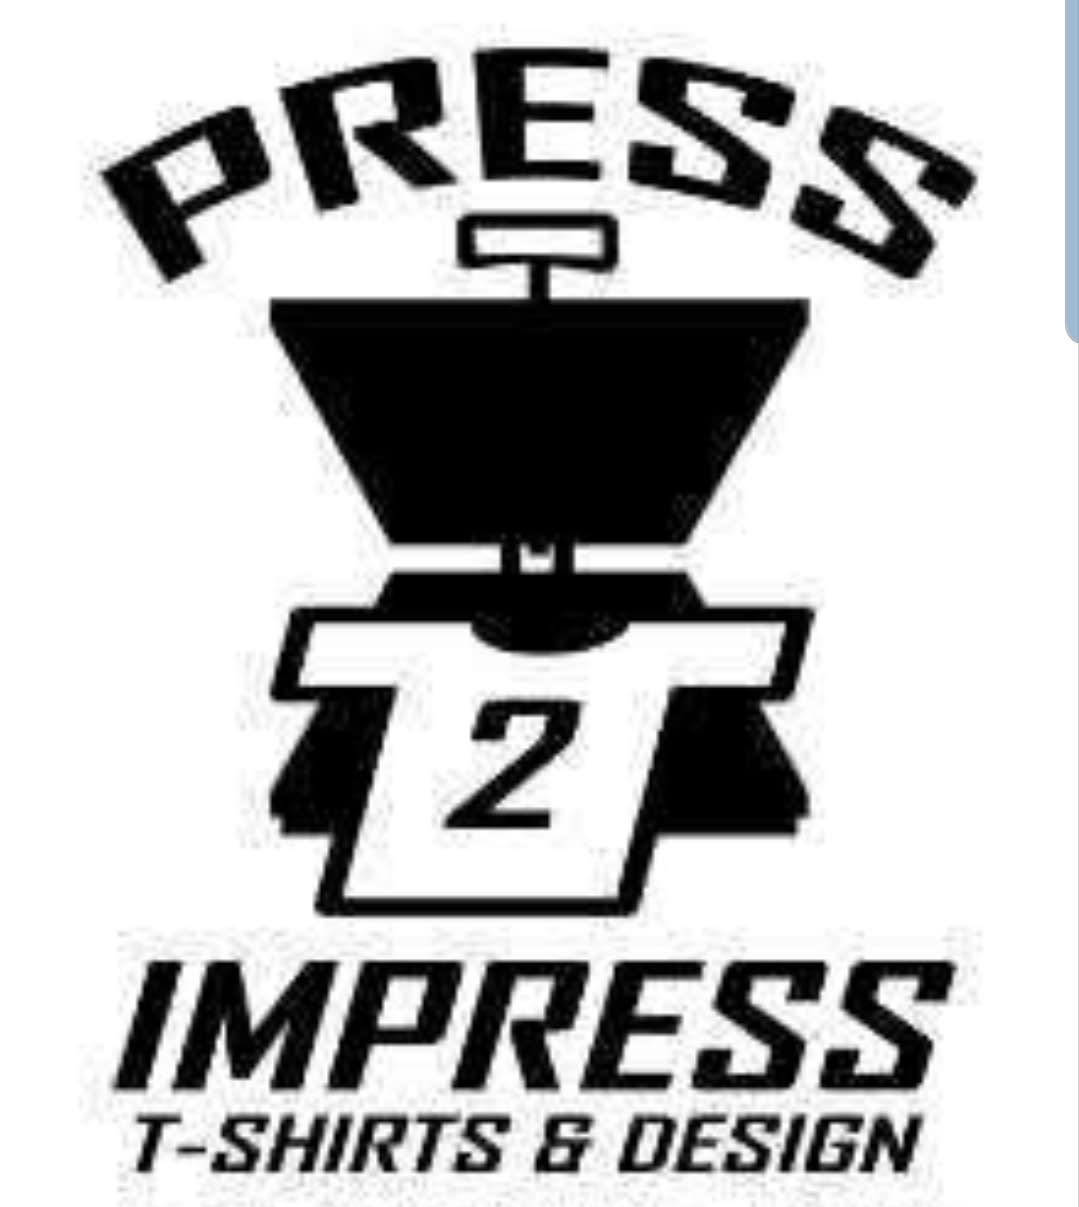 Press 2 Impress Designs